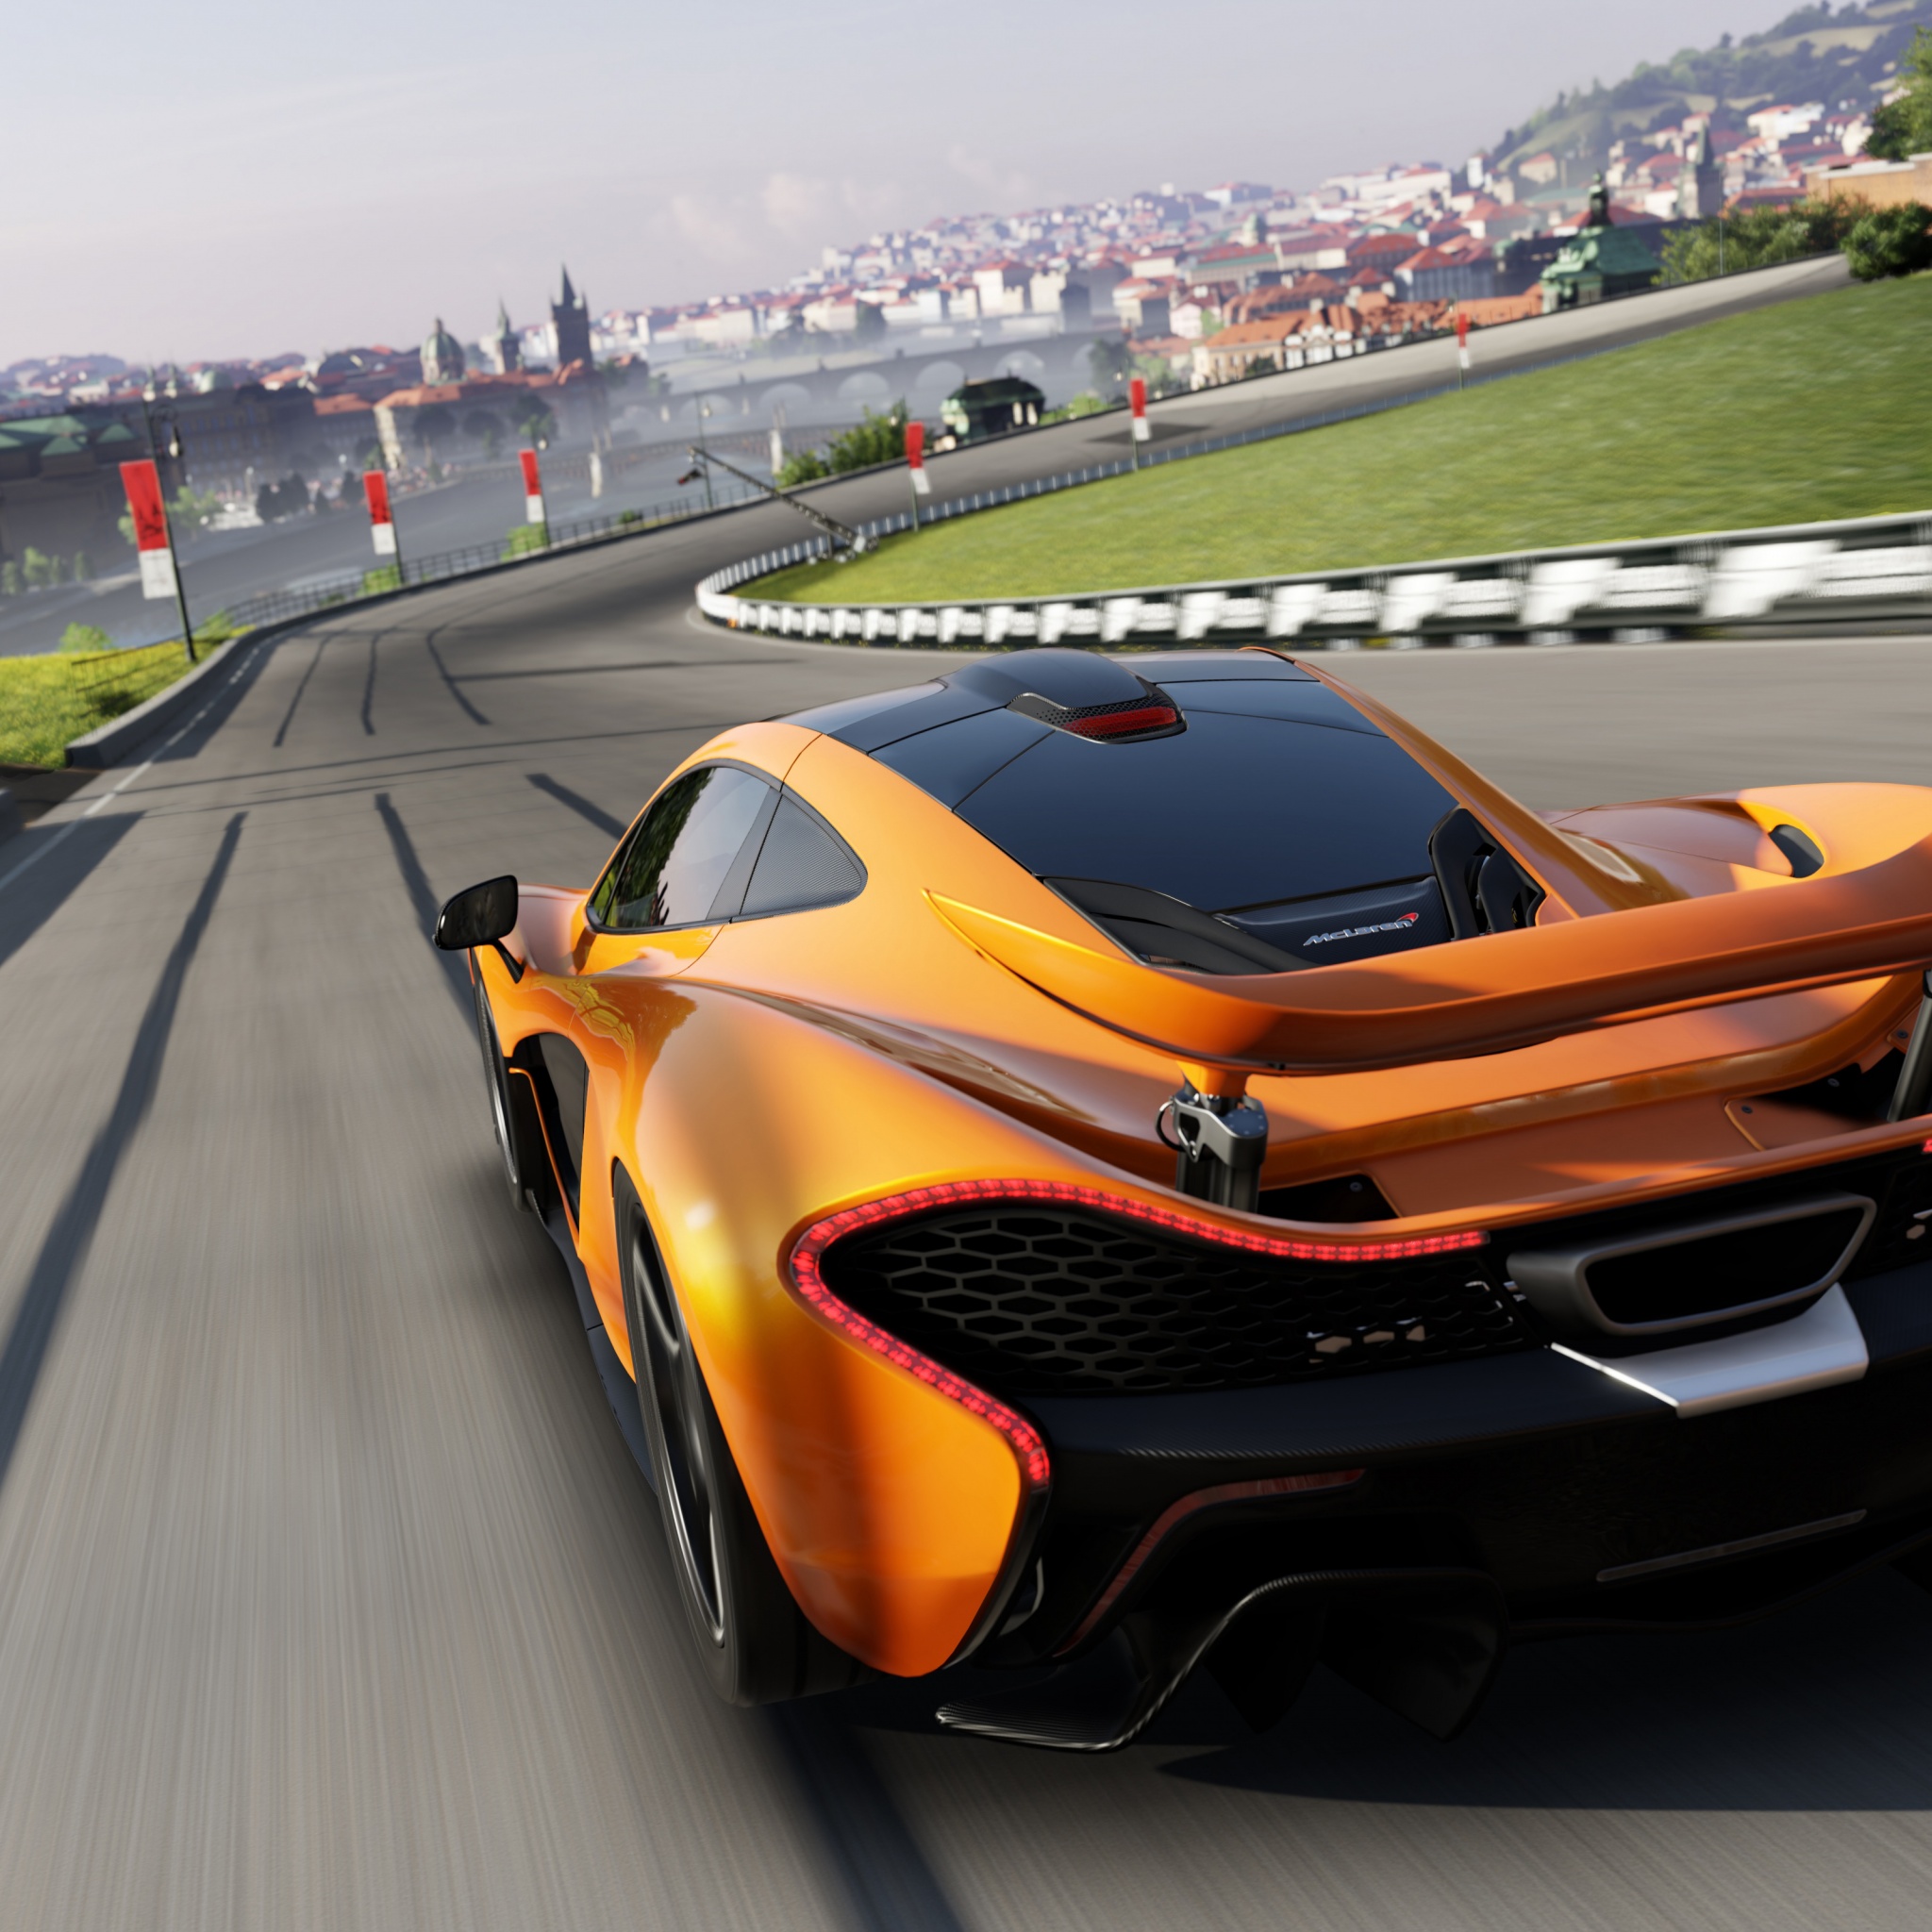 Forza Motorsport 5 - Xbox One Game